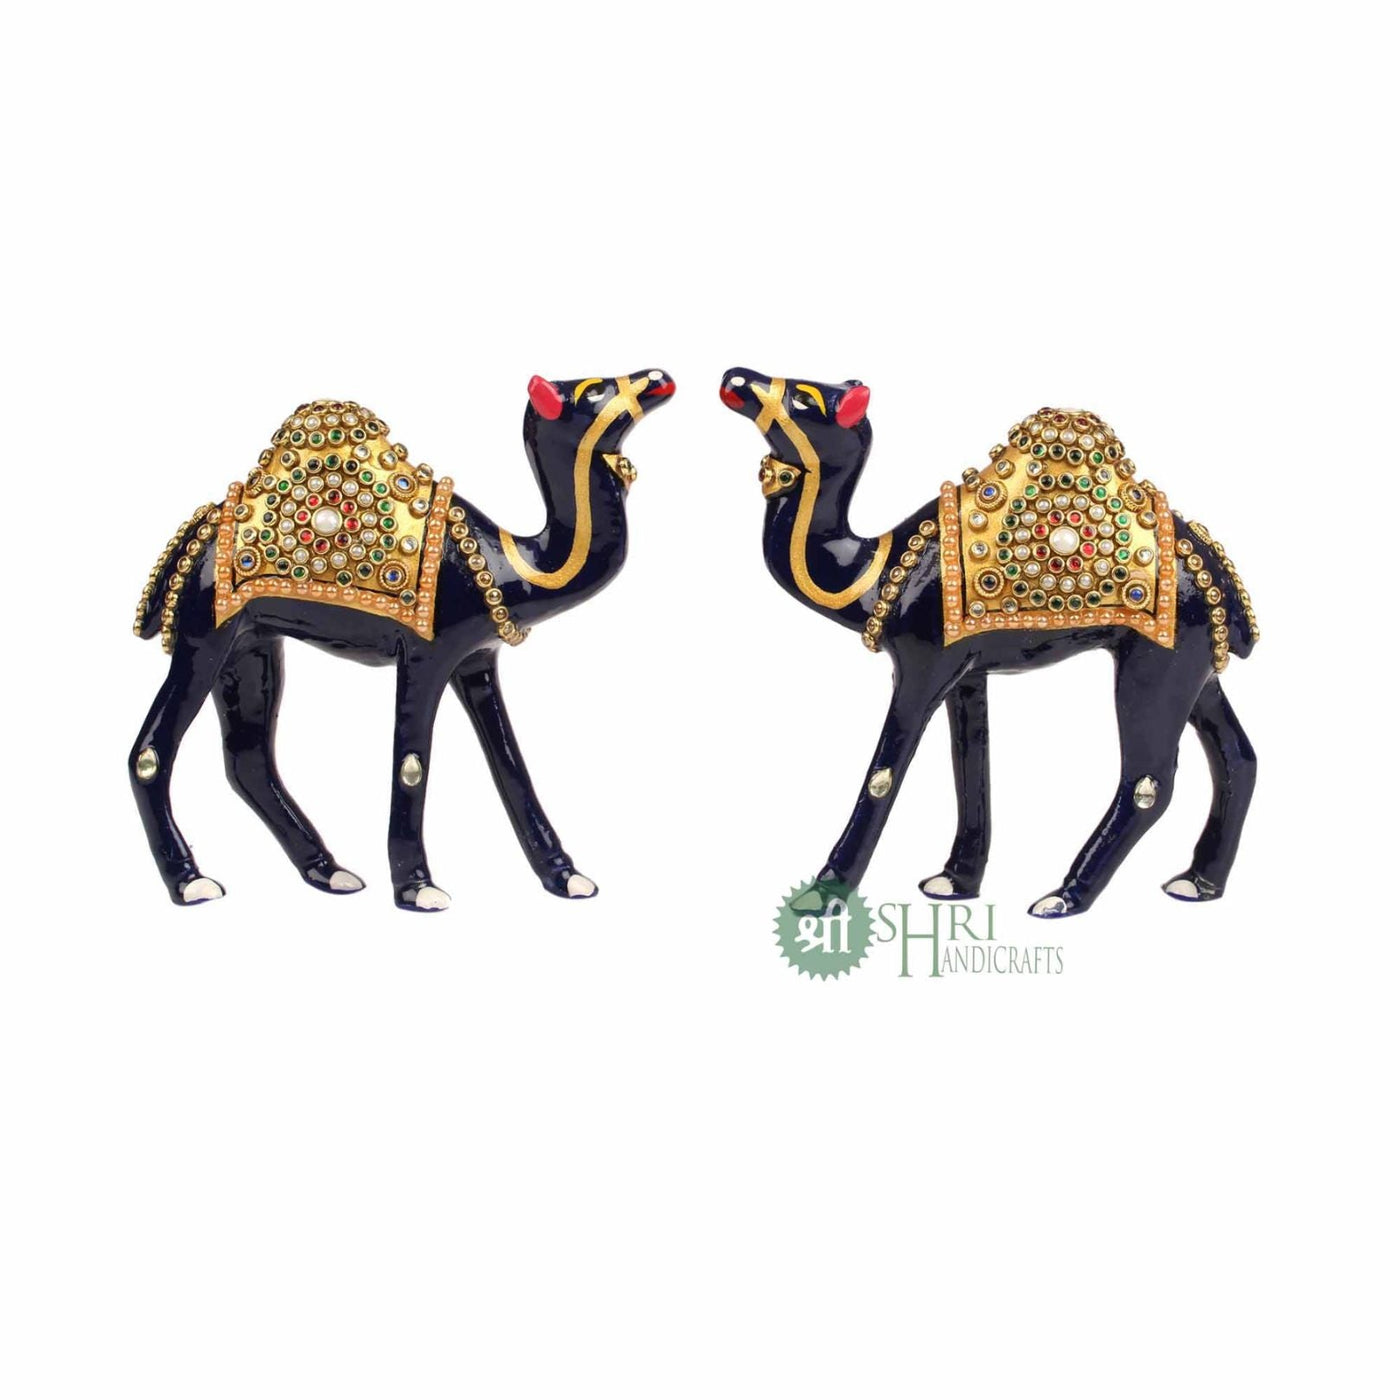 Vintage Showpiece Camel Decor Medium By Trendia Decor